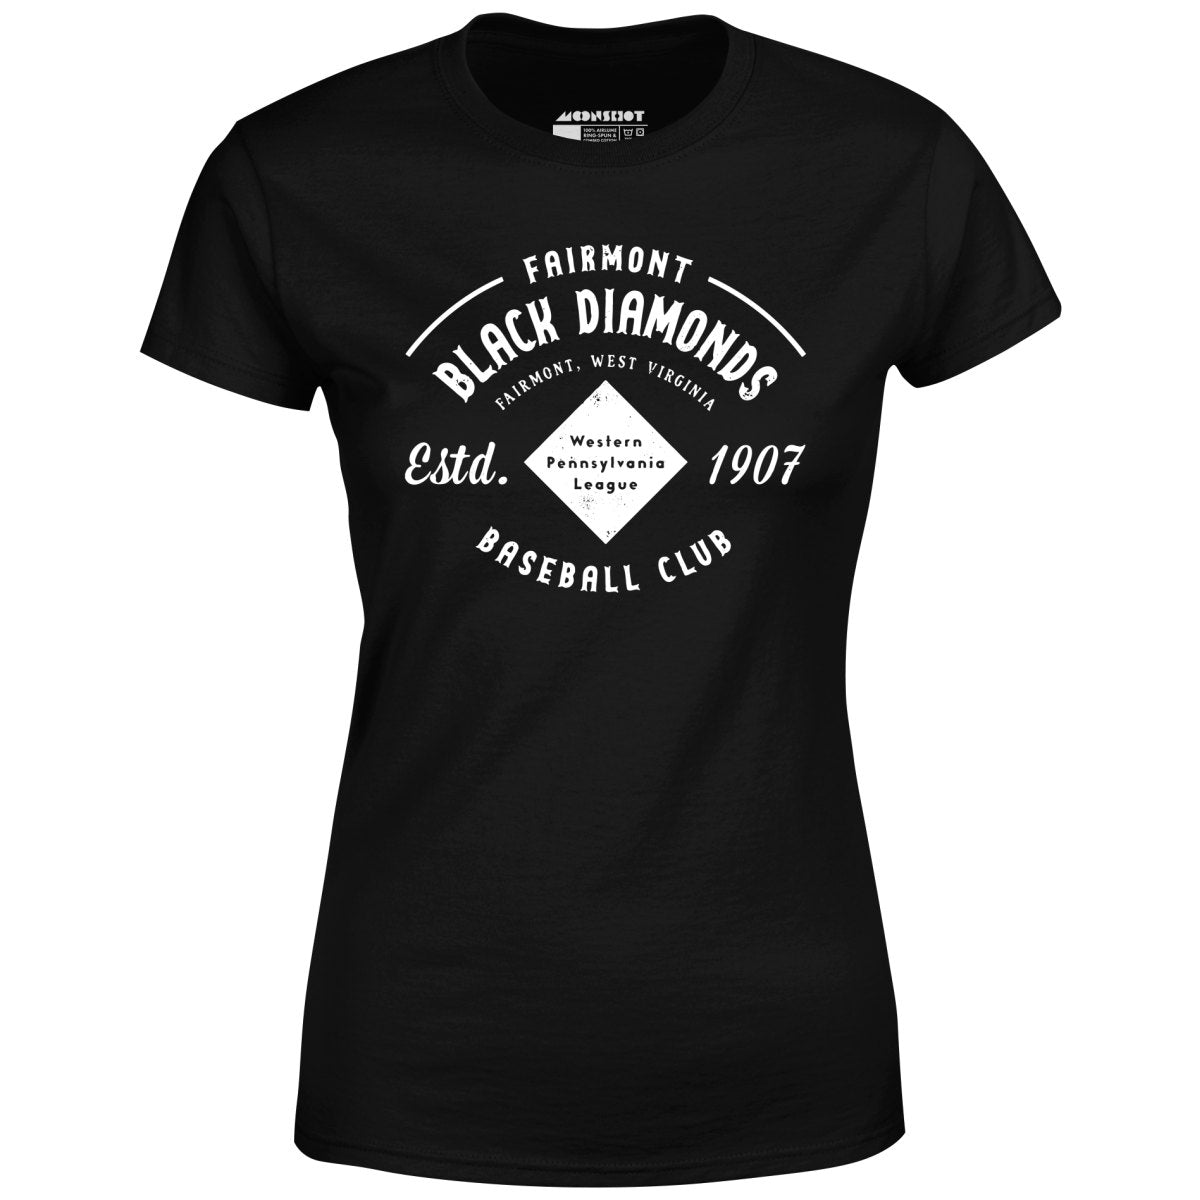 Fairmont Black Diamonds - West Virginia - Vintage Defunct Baseball Teams - Women's T-Shirt